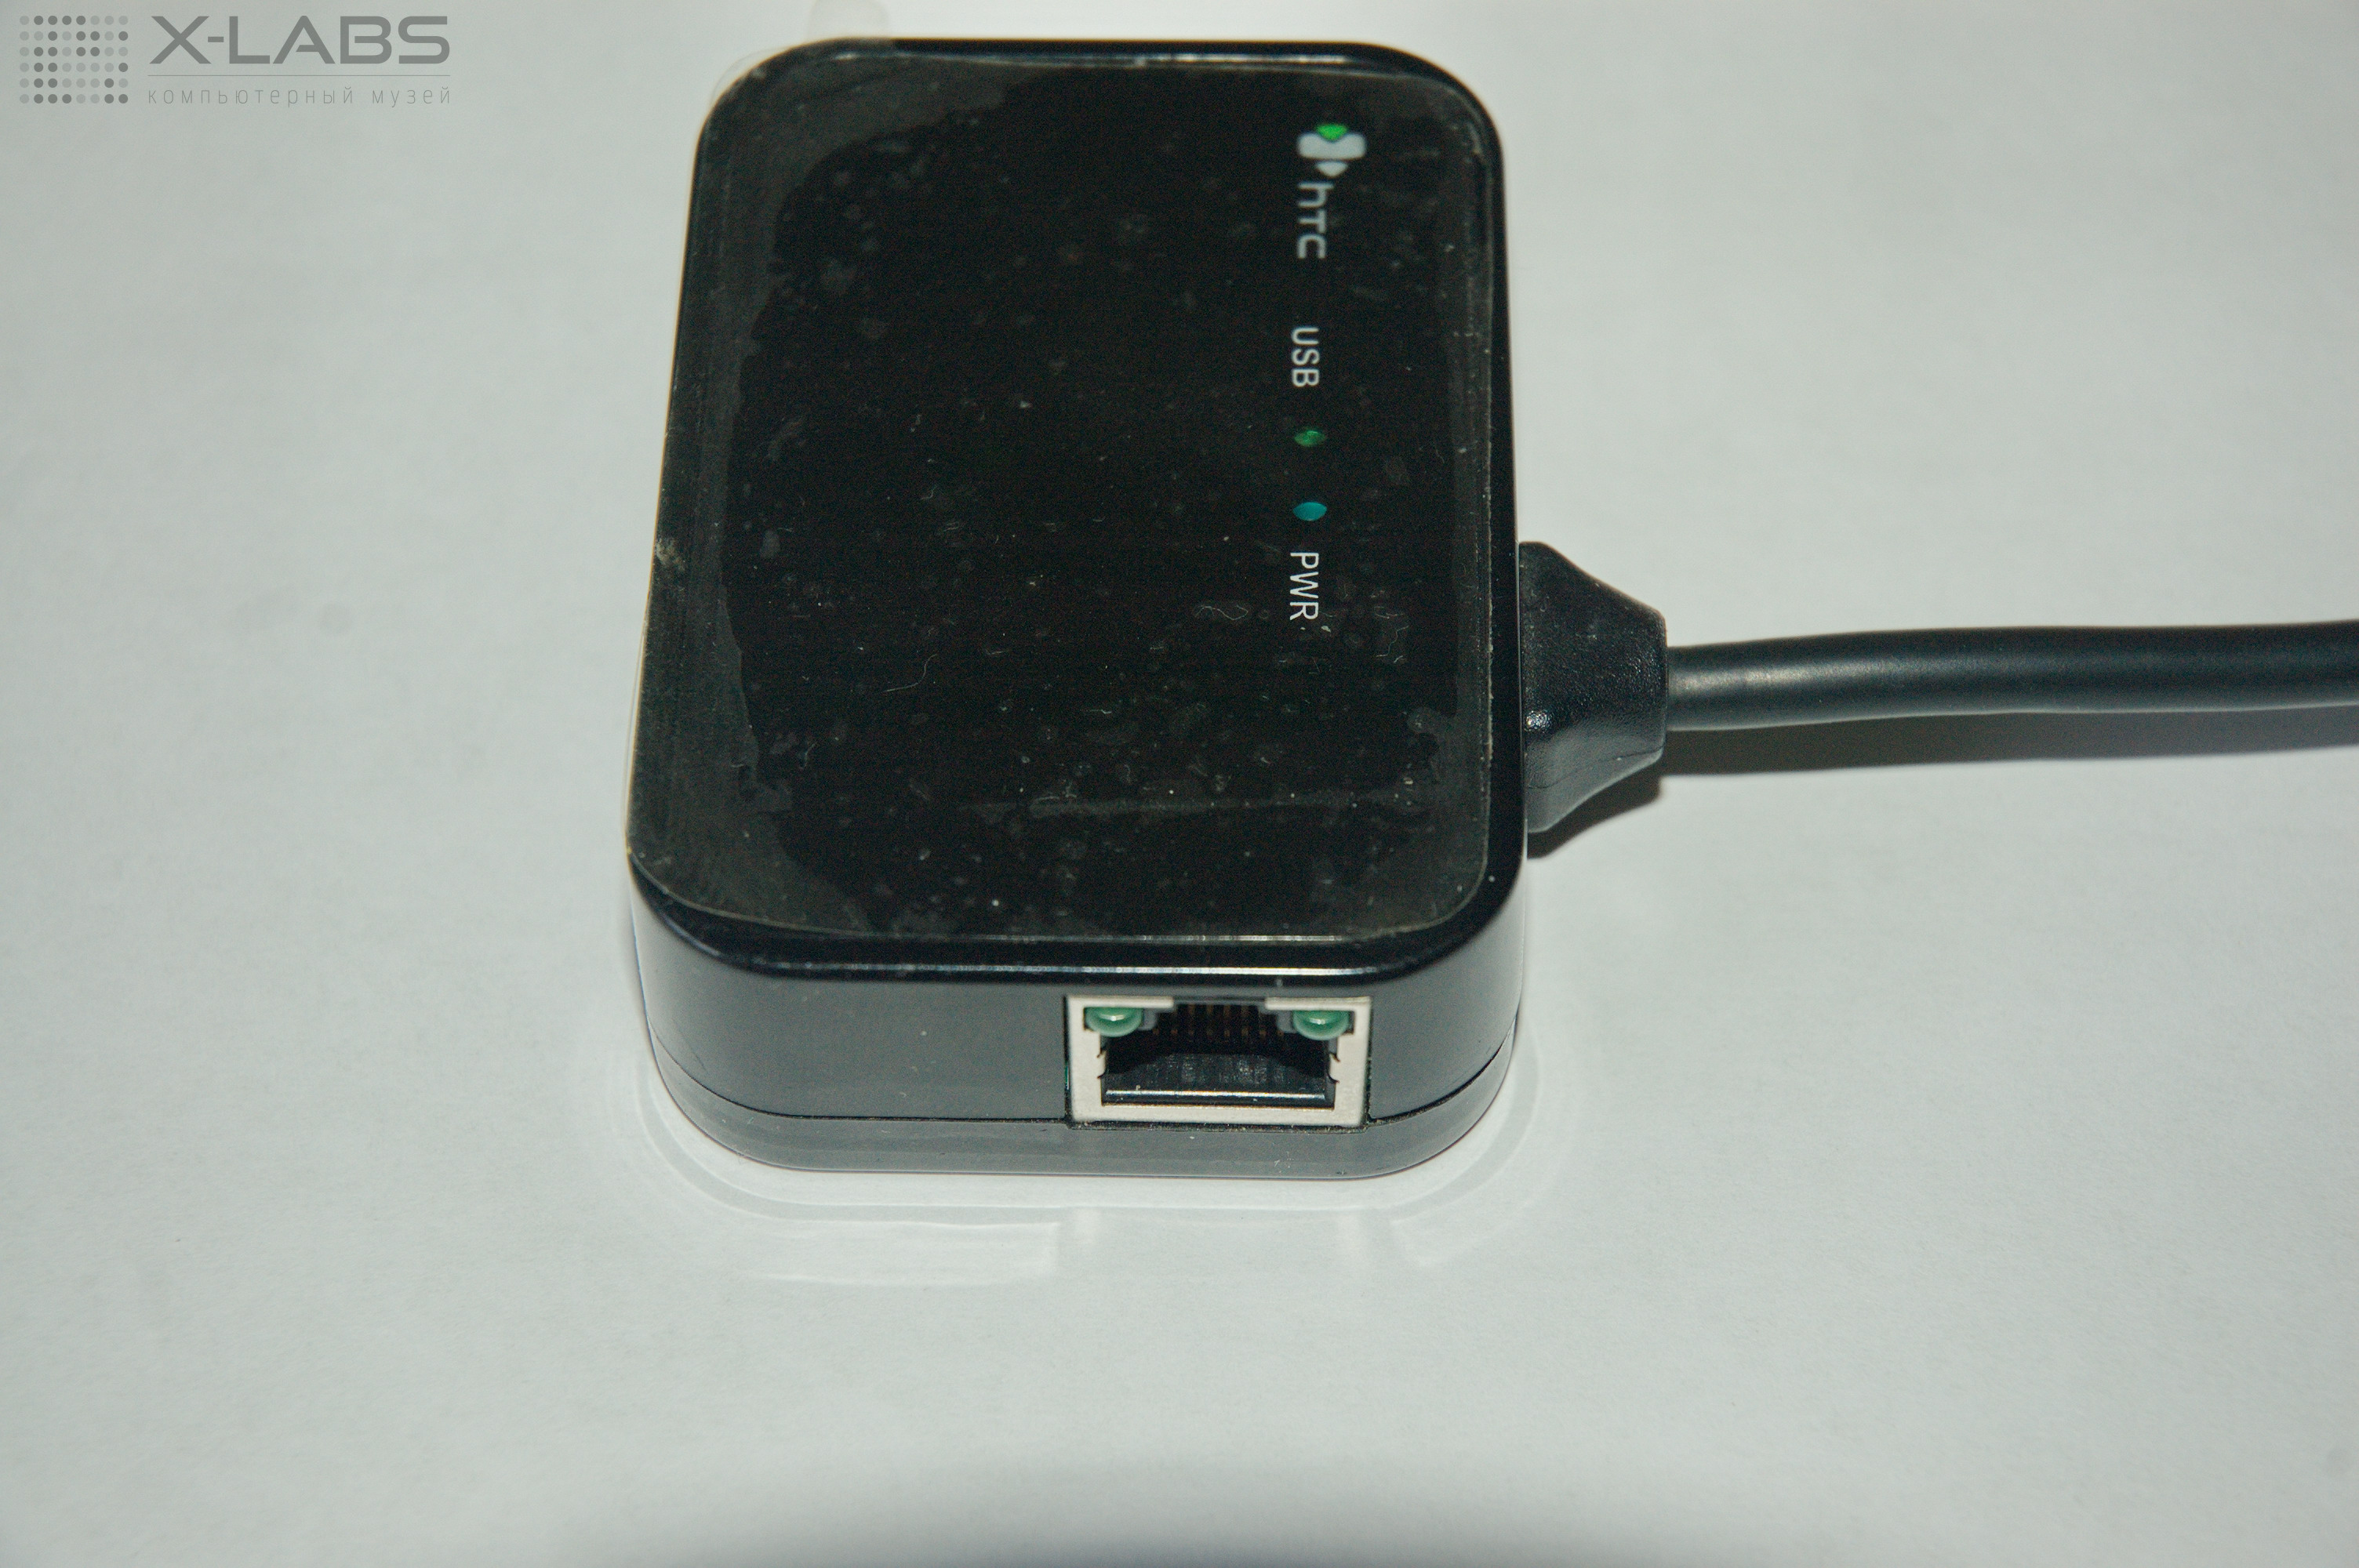 HTC USBHub/NIC